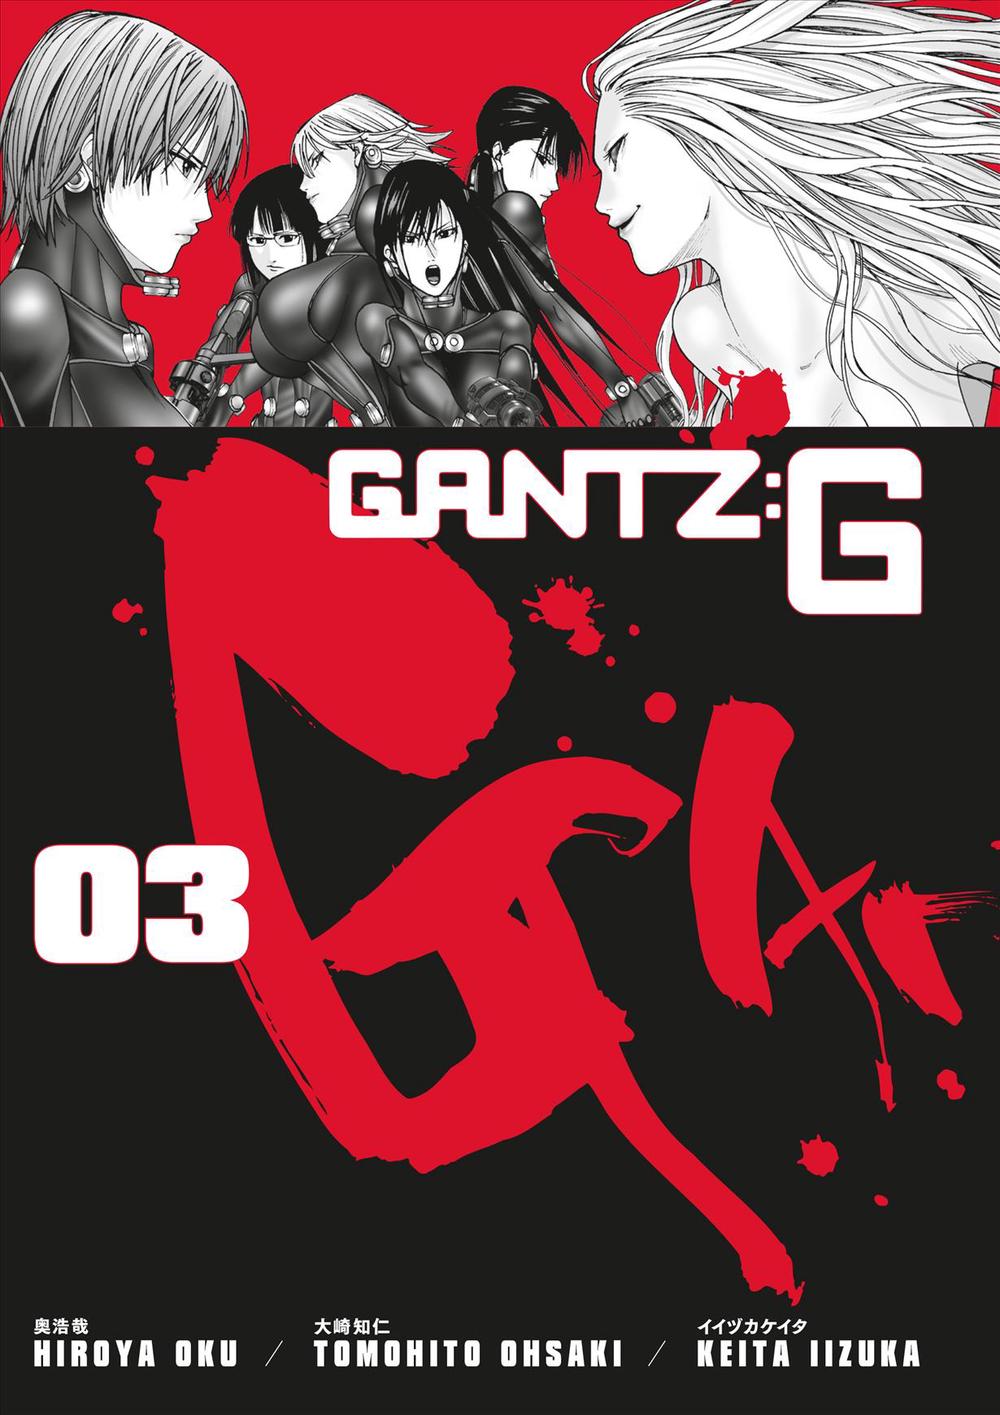 Gantz G Volume 3 By Hiroya Oku Paperback Buy Online At The Nile